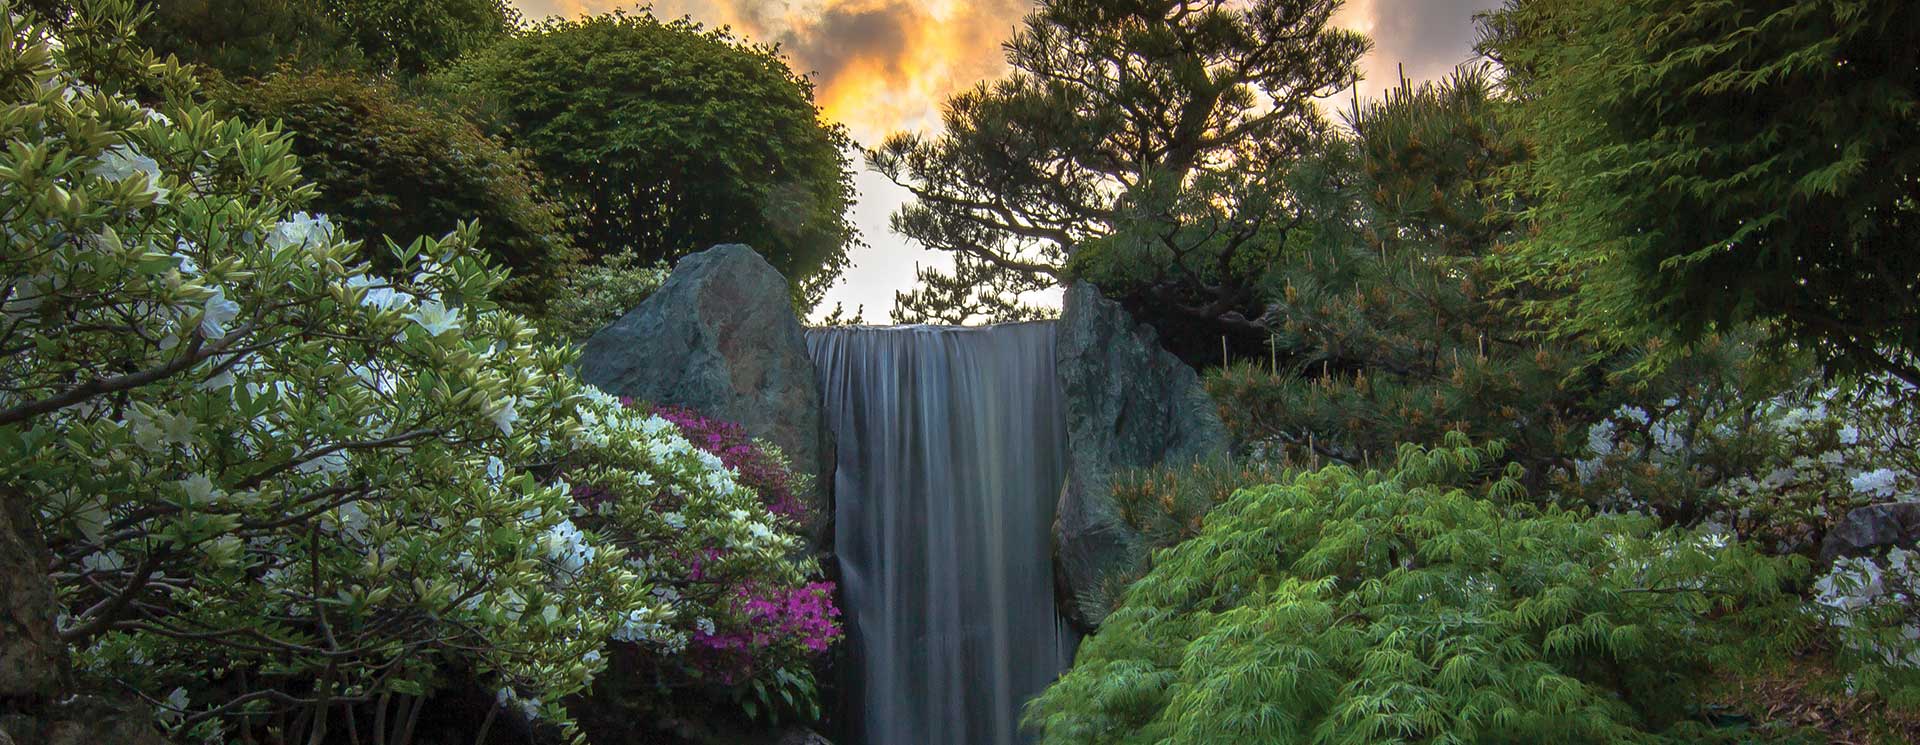 Japanese garden waterfall in a sunset